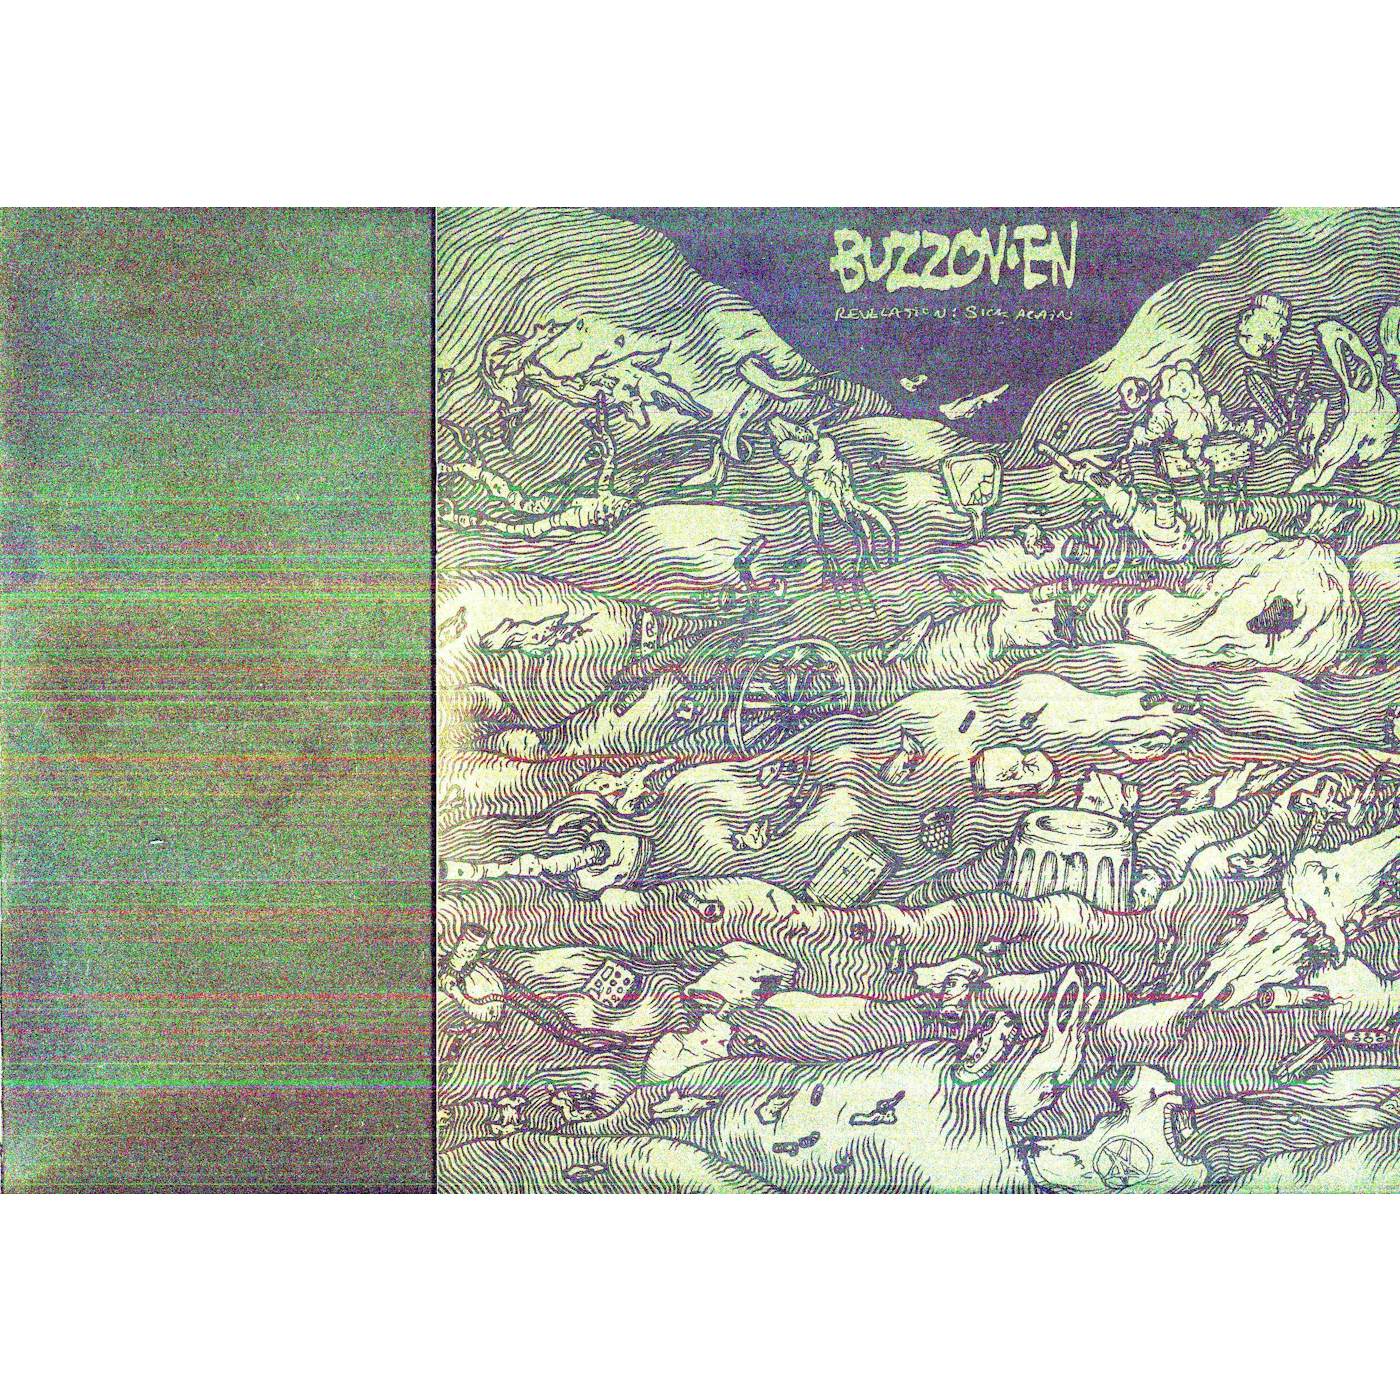 Buzzov•en Revelation: Sick Again Vinyl Record